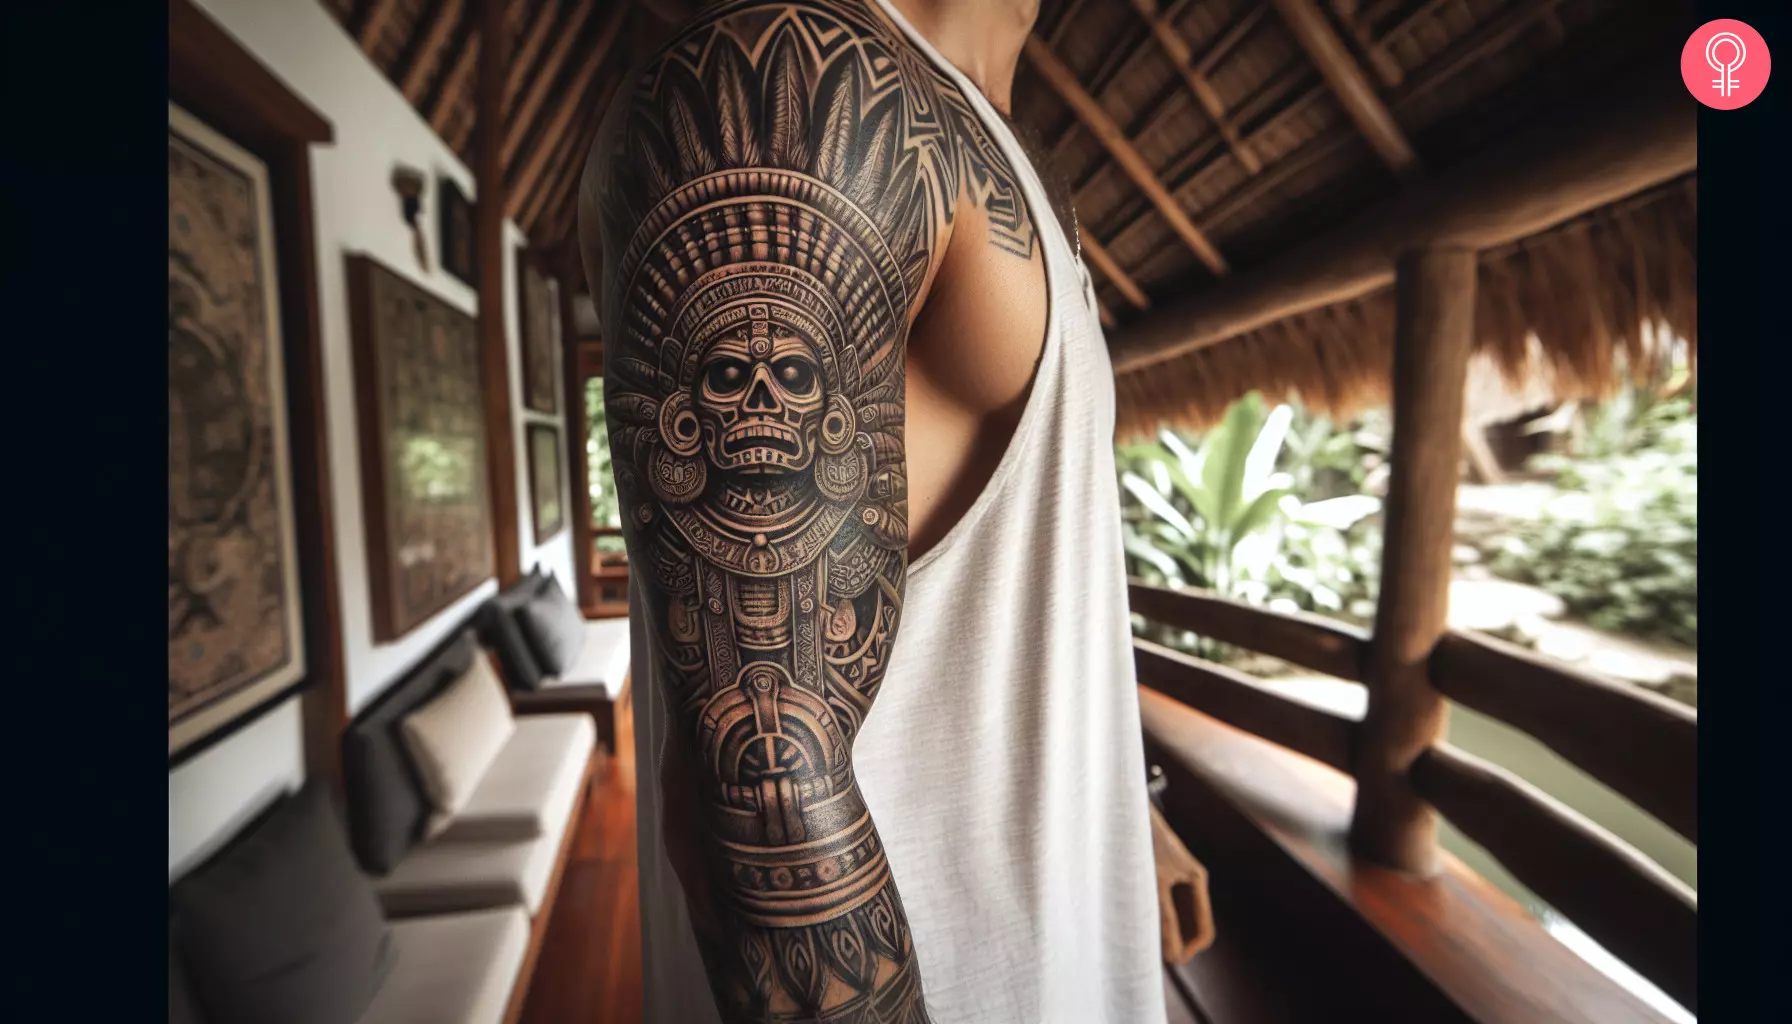 A Mayan Indian tattoo on a man’s arm